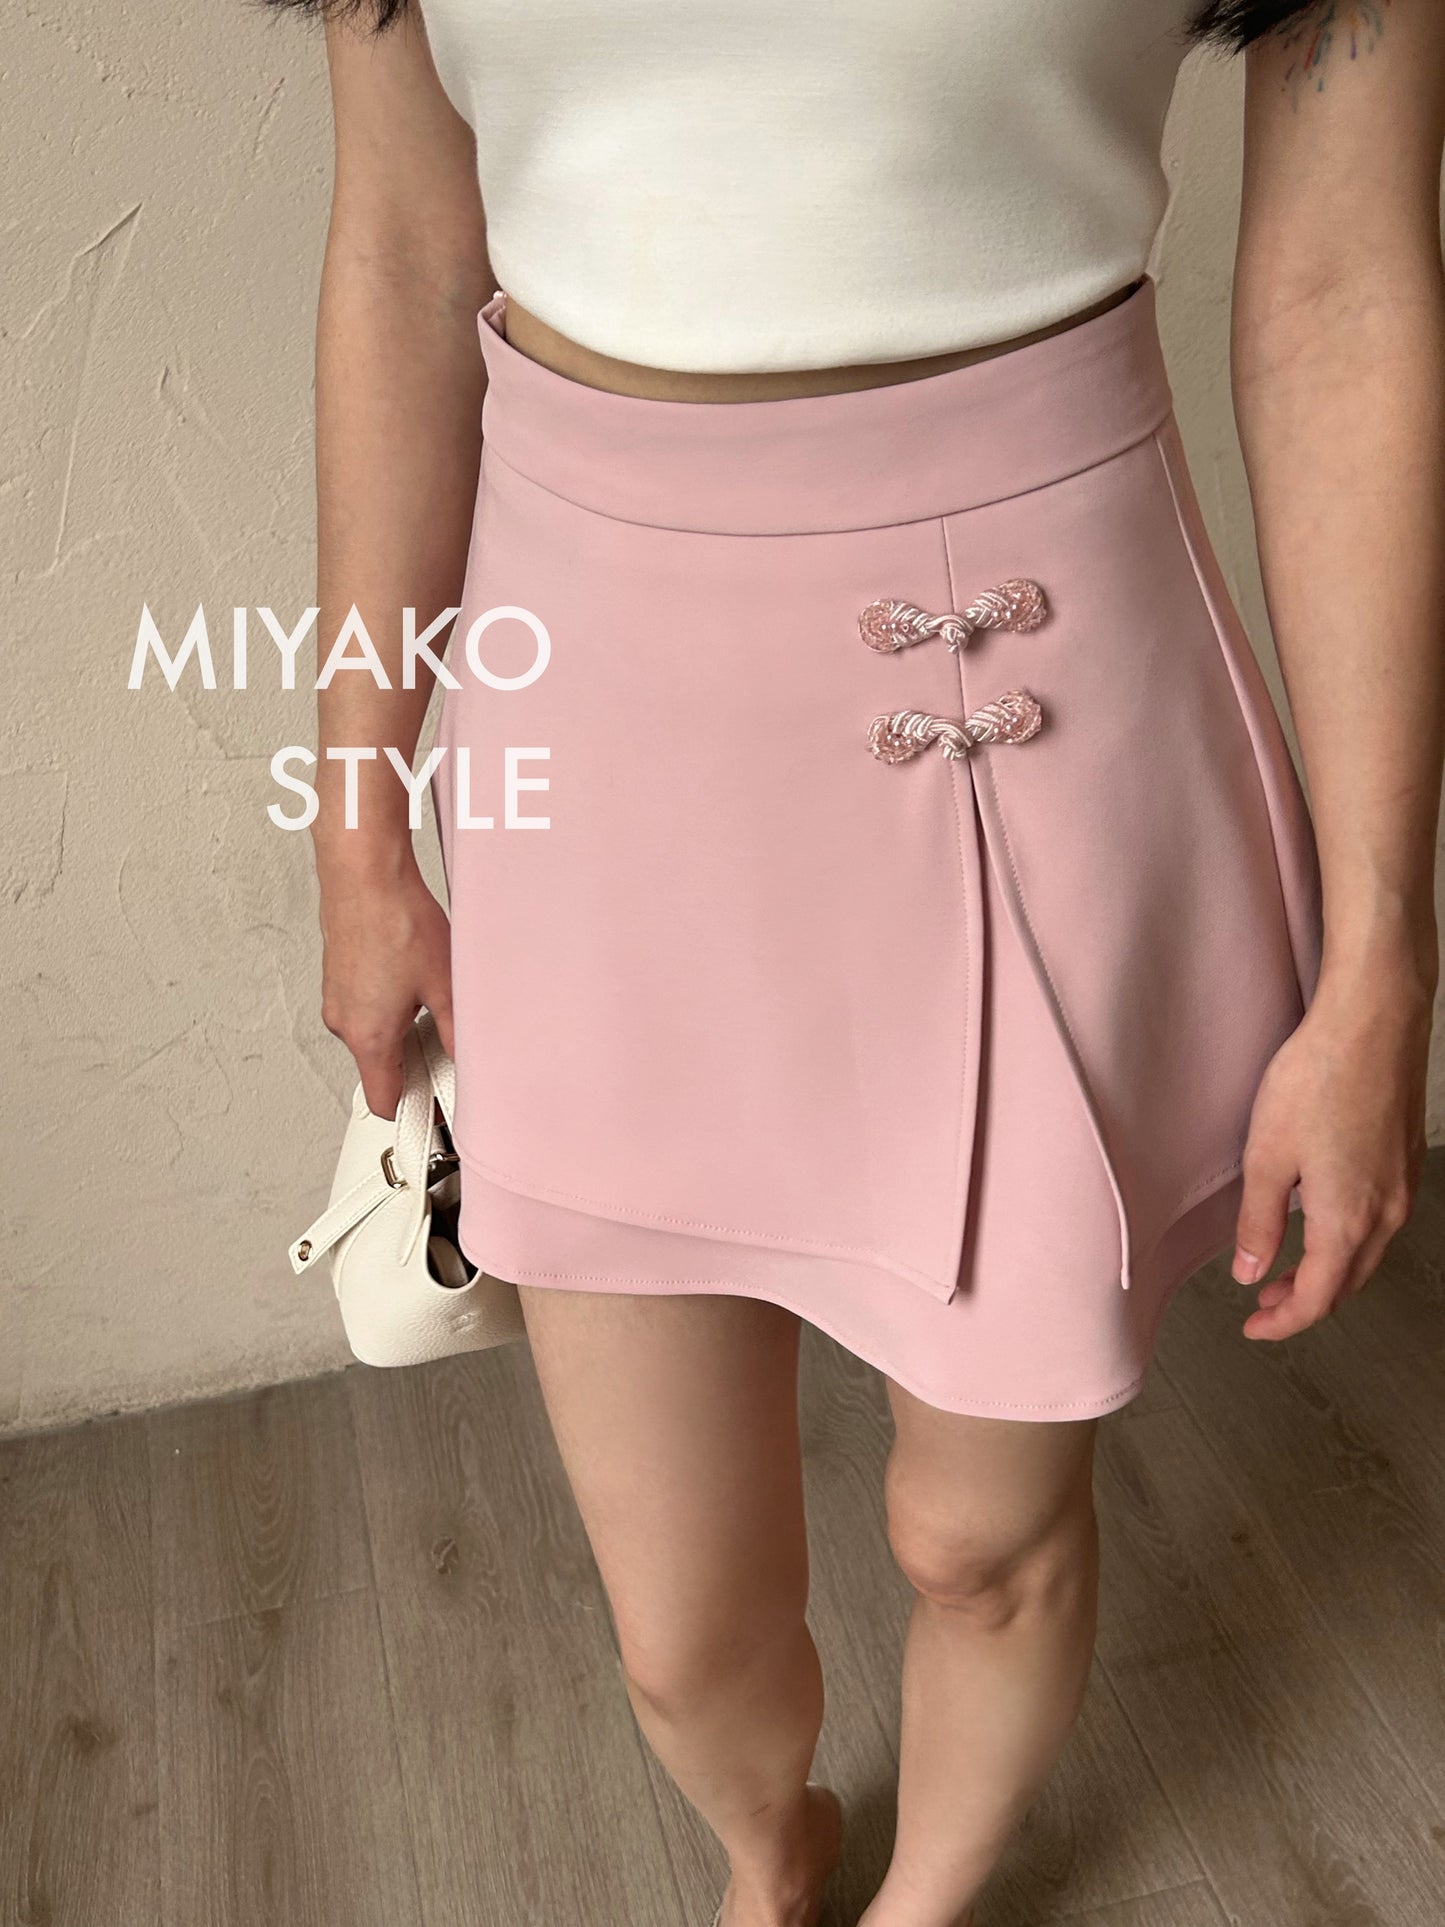 【东方美】Oriental double layer mini skirt in pink 粉色新中式半身裙